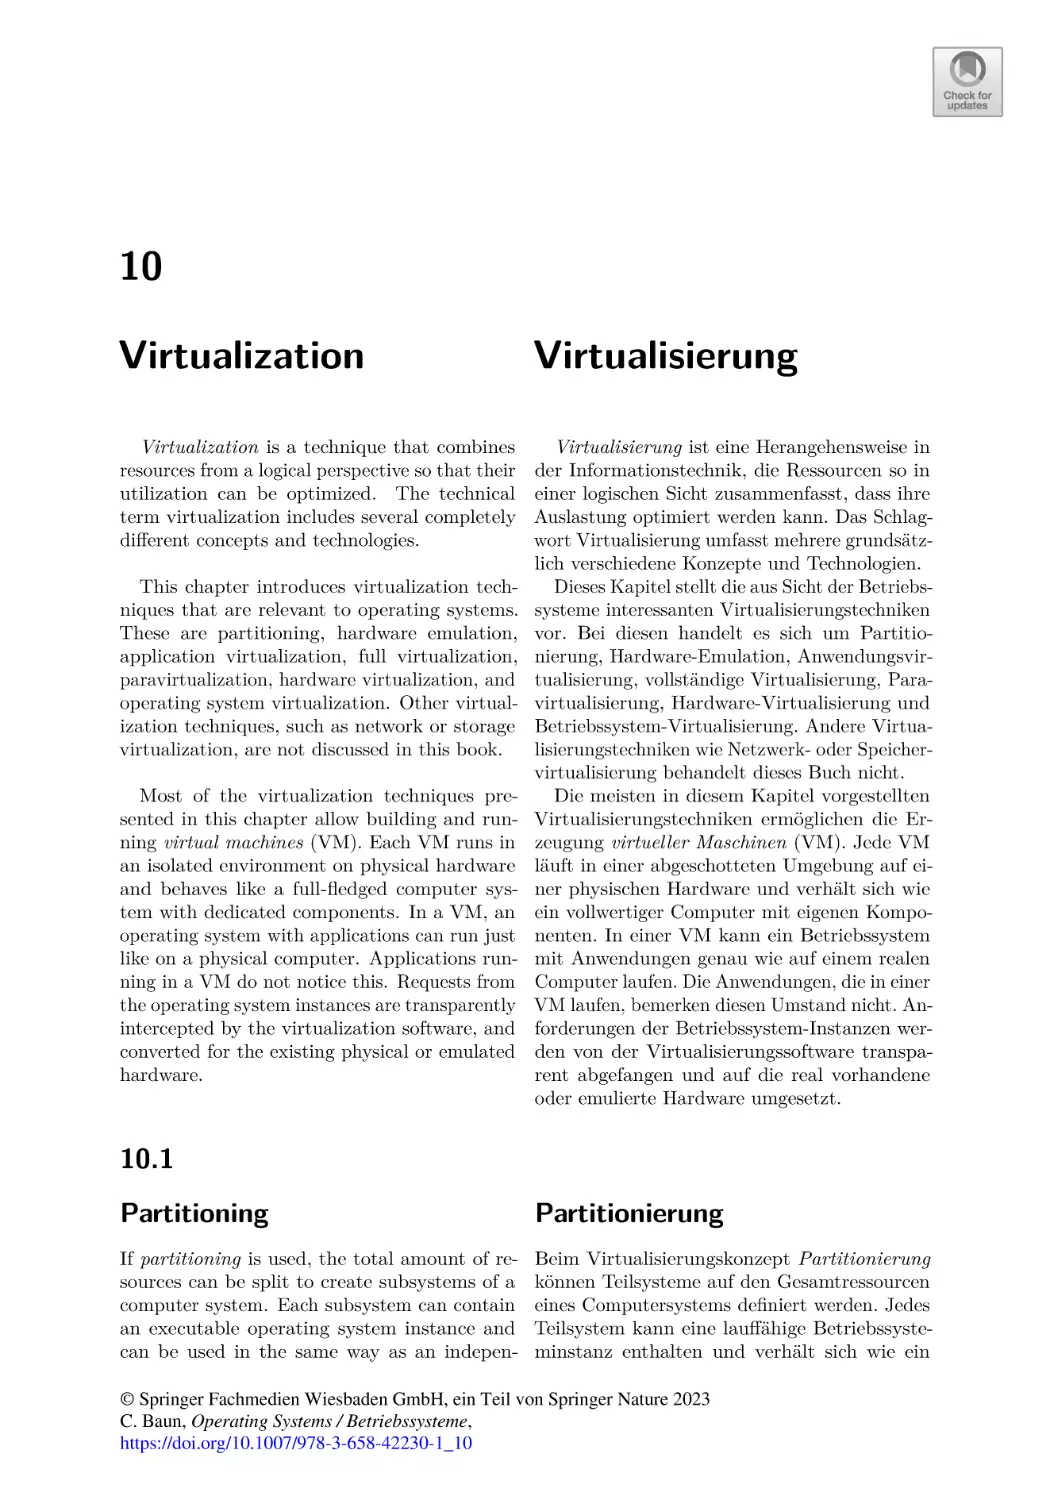 10
Virtualization
10.1
Partitioning